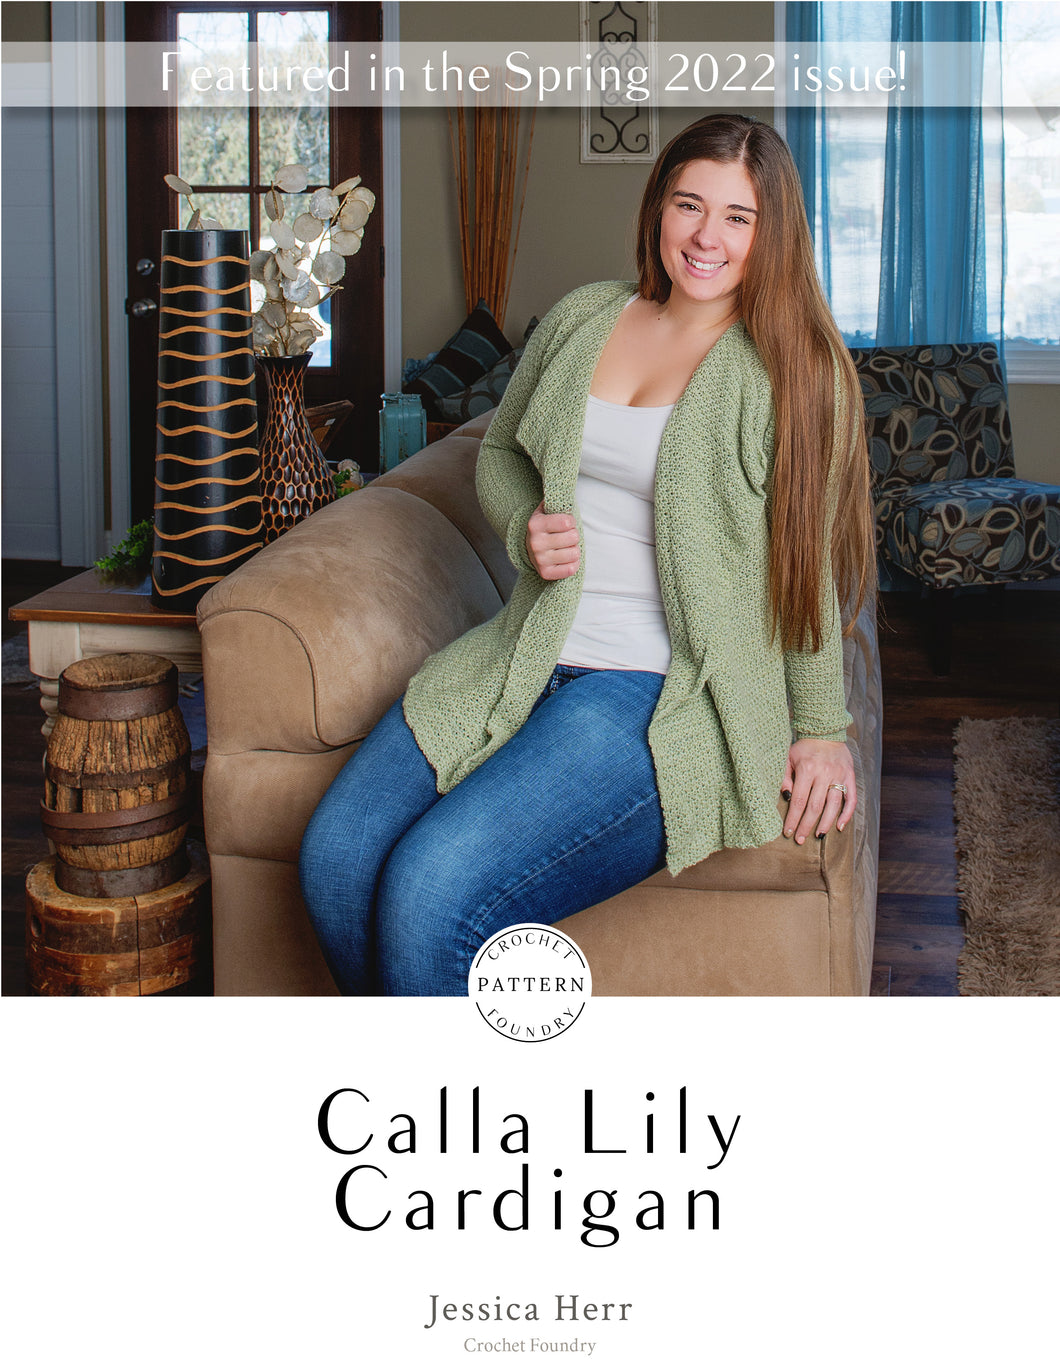 Calla Lily Cardigan PDF Crochet Pattern by Jessica Herr